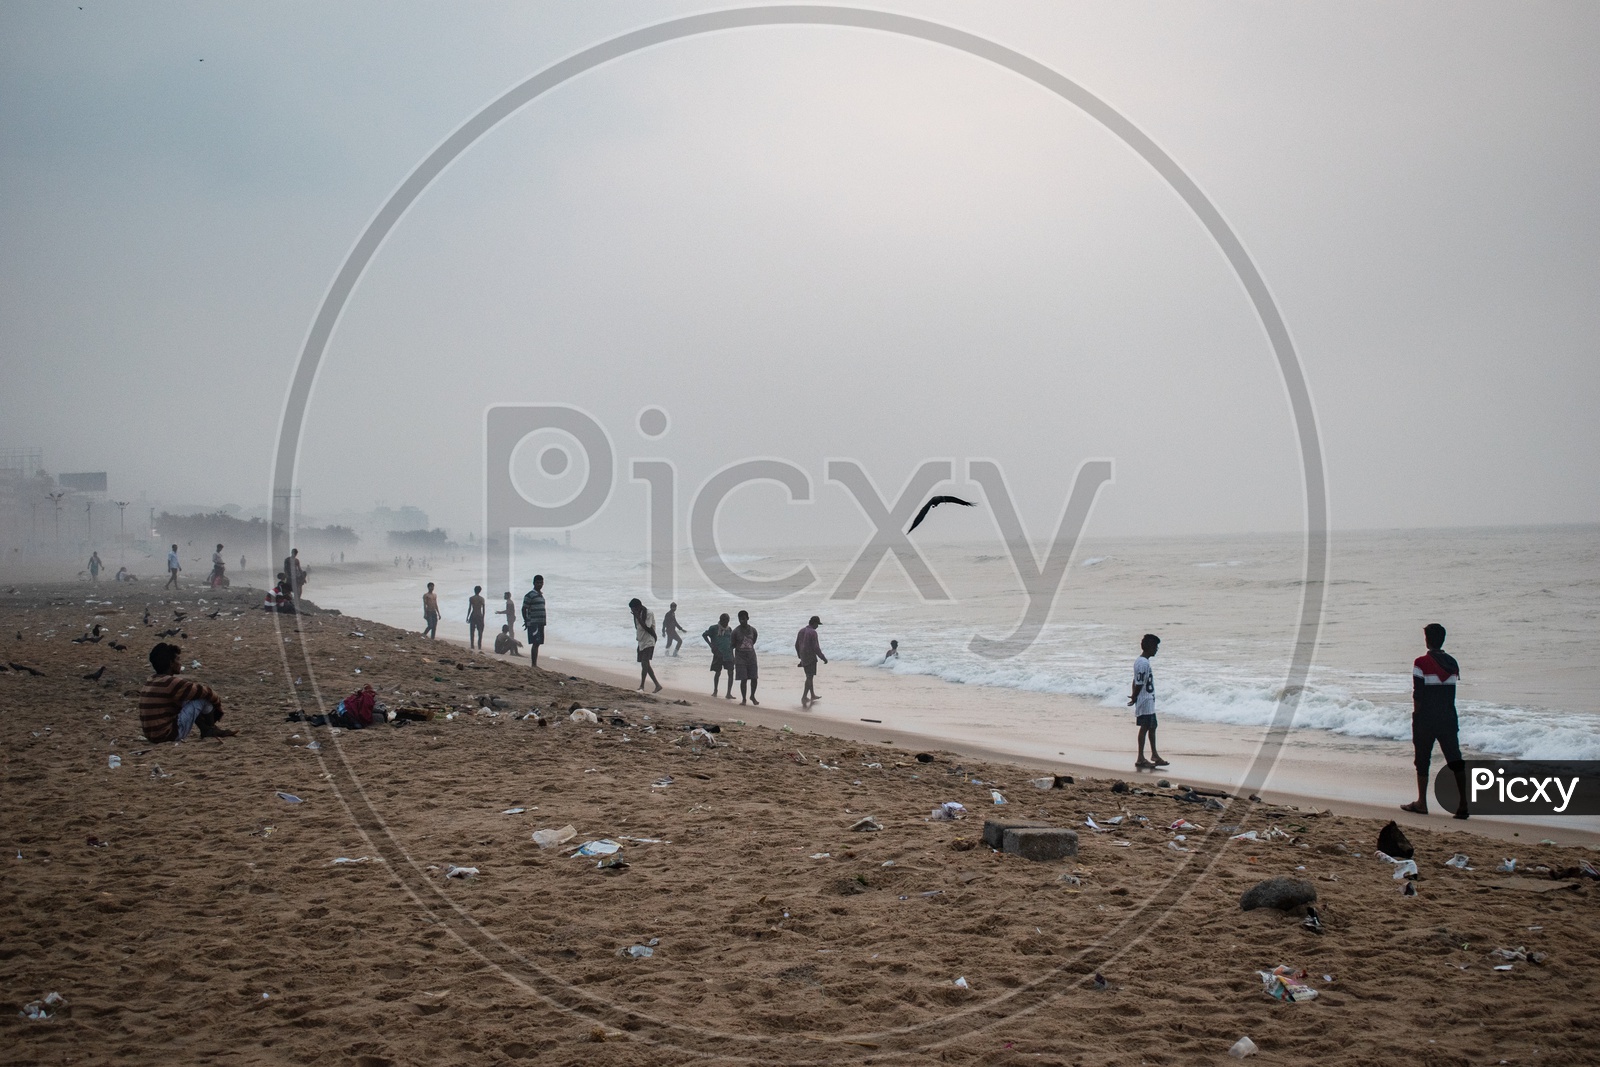 People/Group of people enjoying the beach view at Rama Krishna beach (R.K.Beach), Vishakapatnam/Vizag.